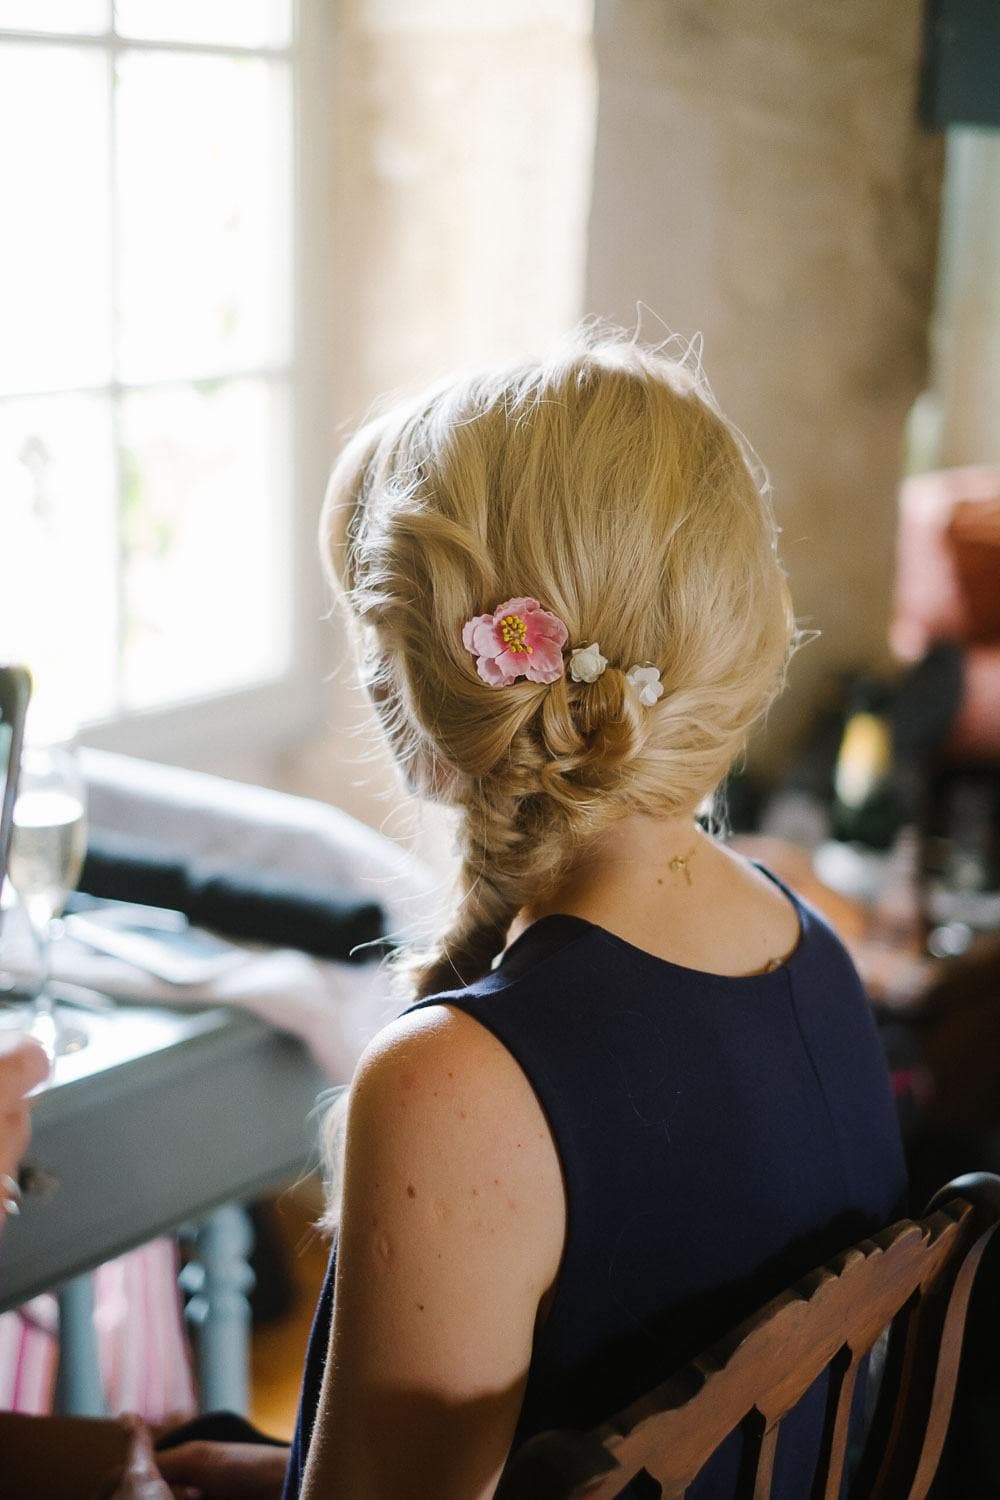 bride instagram details hair Annie Salmon Lartigolle Chateau Puissentut www.jesuscaballero.com #rusticwedding #minimalist #pronovias #weddingdress #gown #countryside #frenchwedding #ChateauPuissentut www.jesuscaballero.com